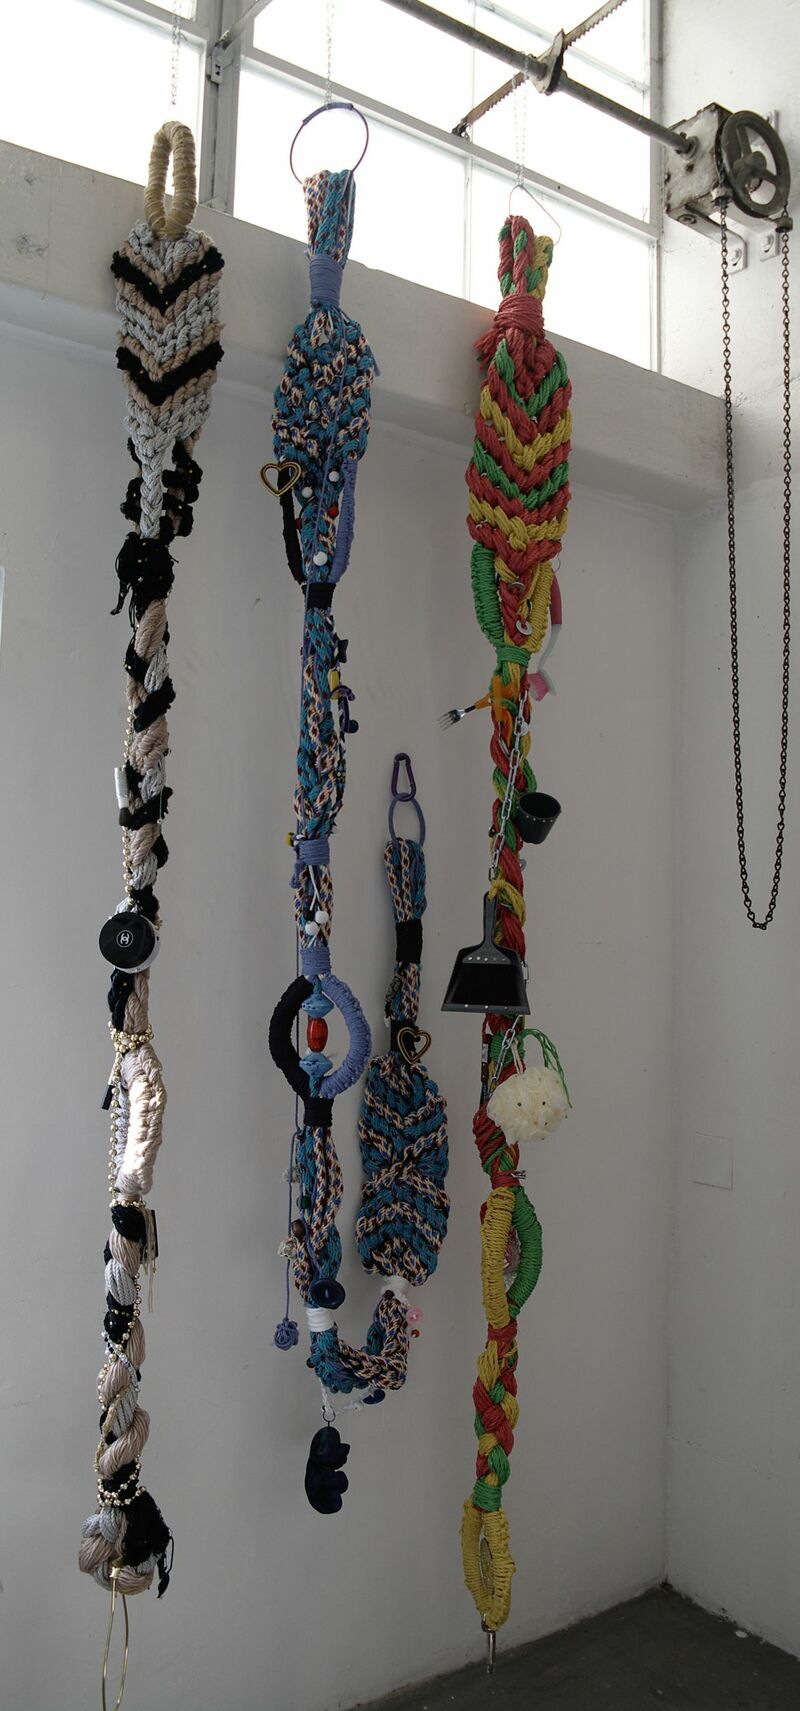 Big Bracelets / Video Bracelts - a Sculpture & Installation by Hyeyoung Maeng